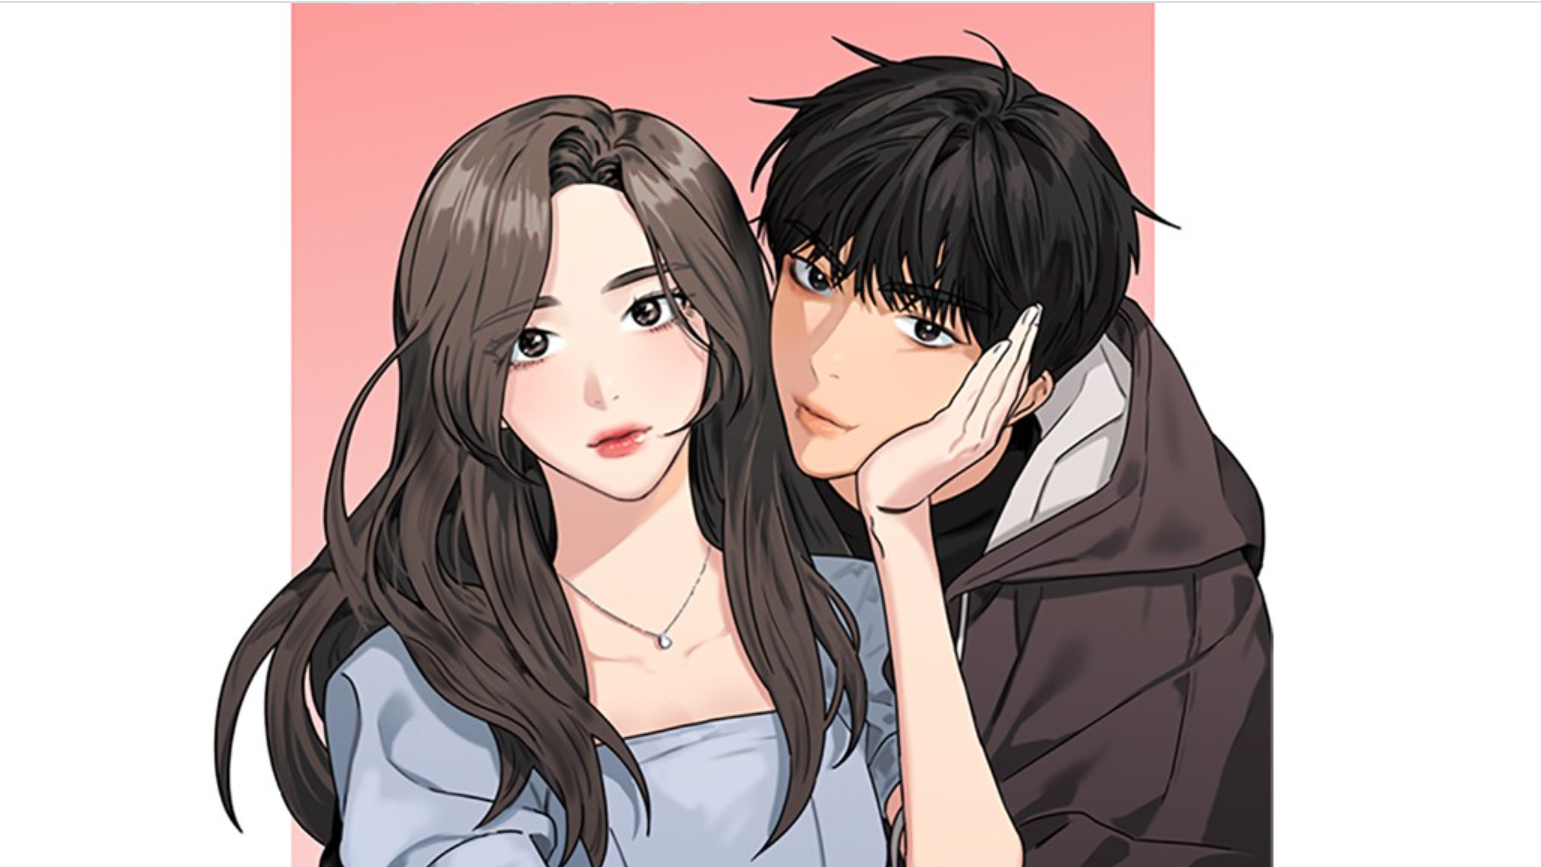 Bae Yeonhee and Yoon Yikyung in the romantic Webtoon, 'To Love Your Enemy'